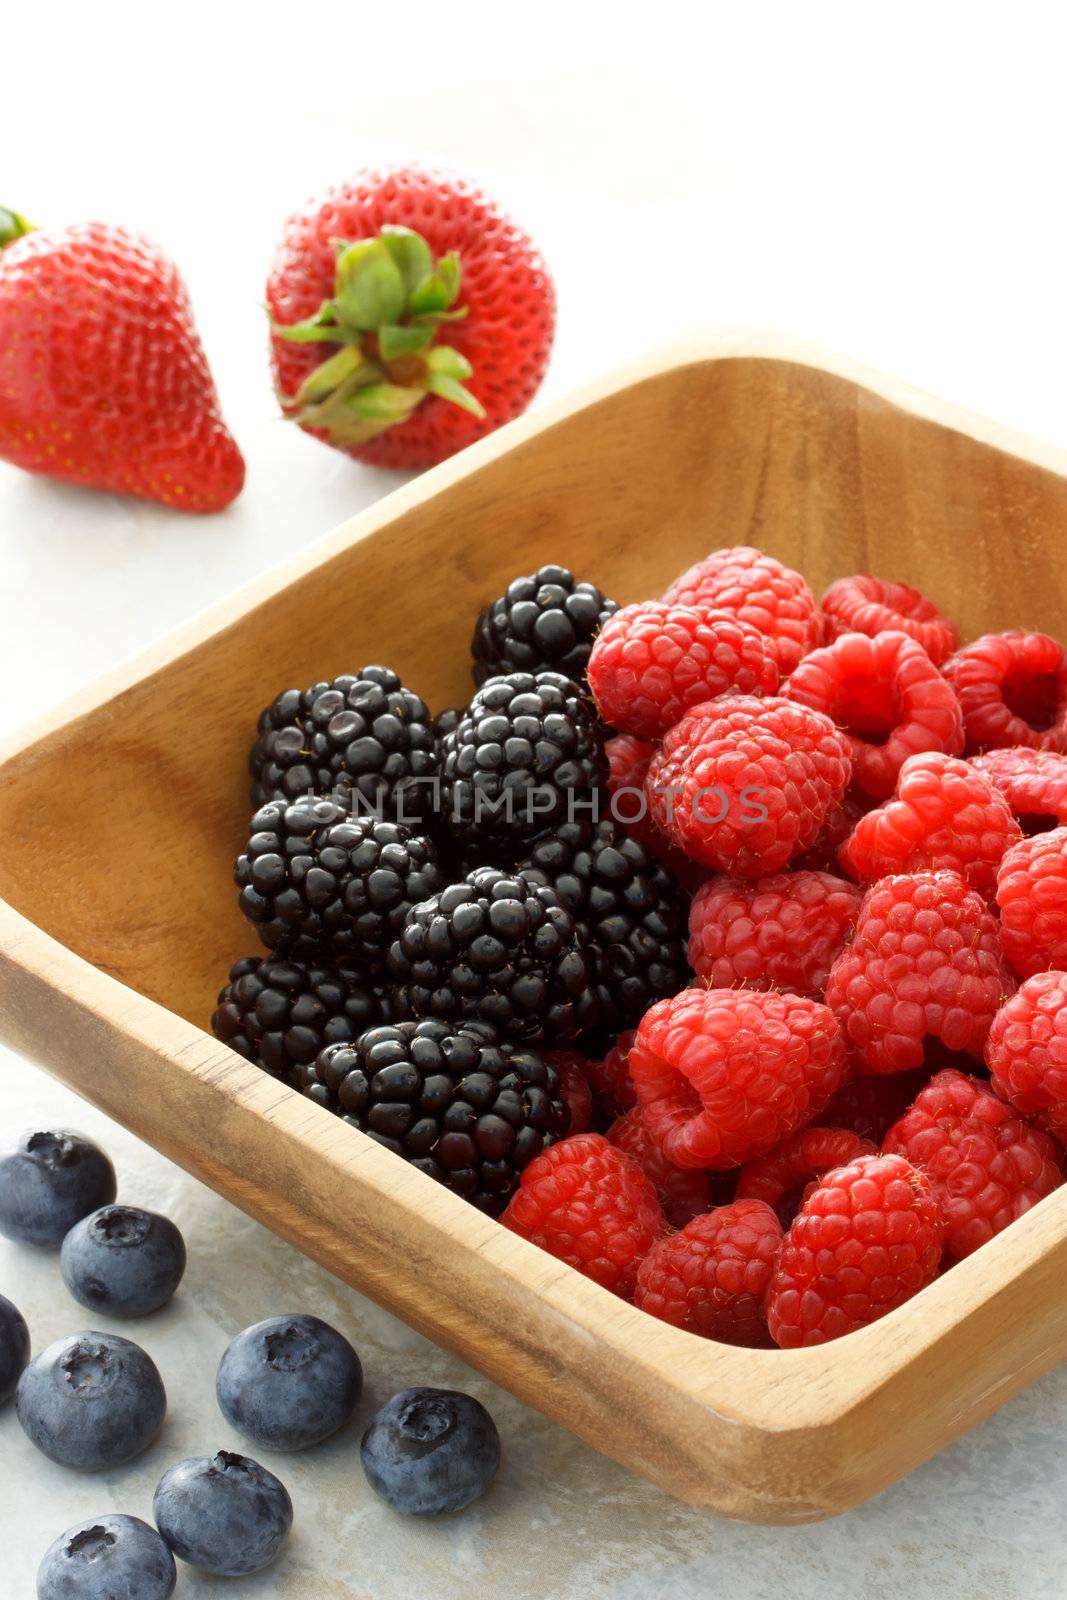 Assorted fresh berries in wooden bowl